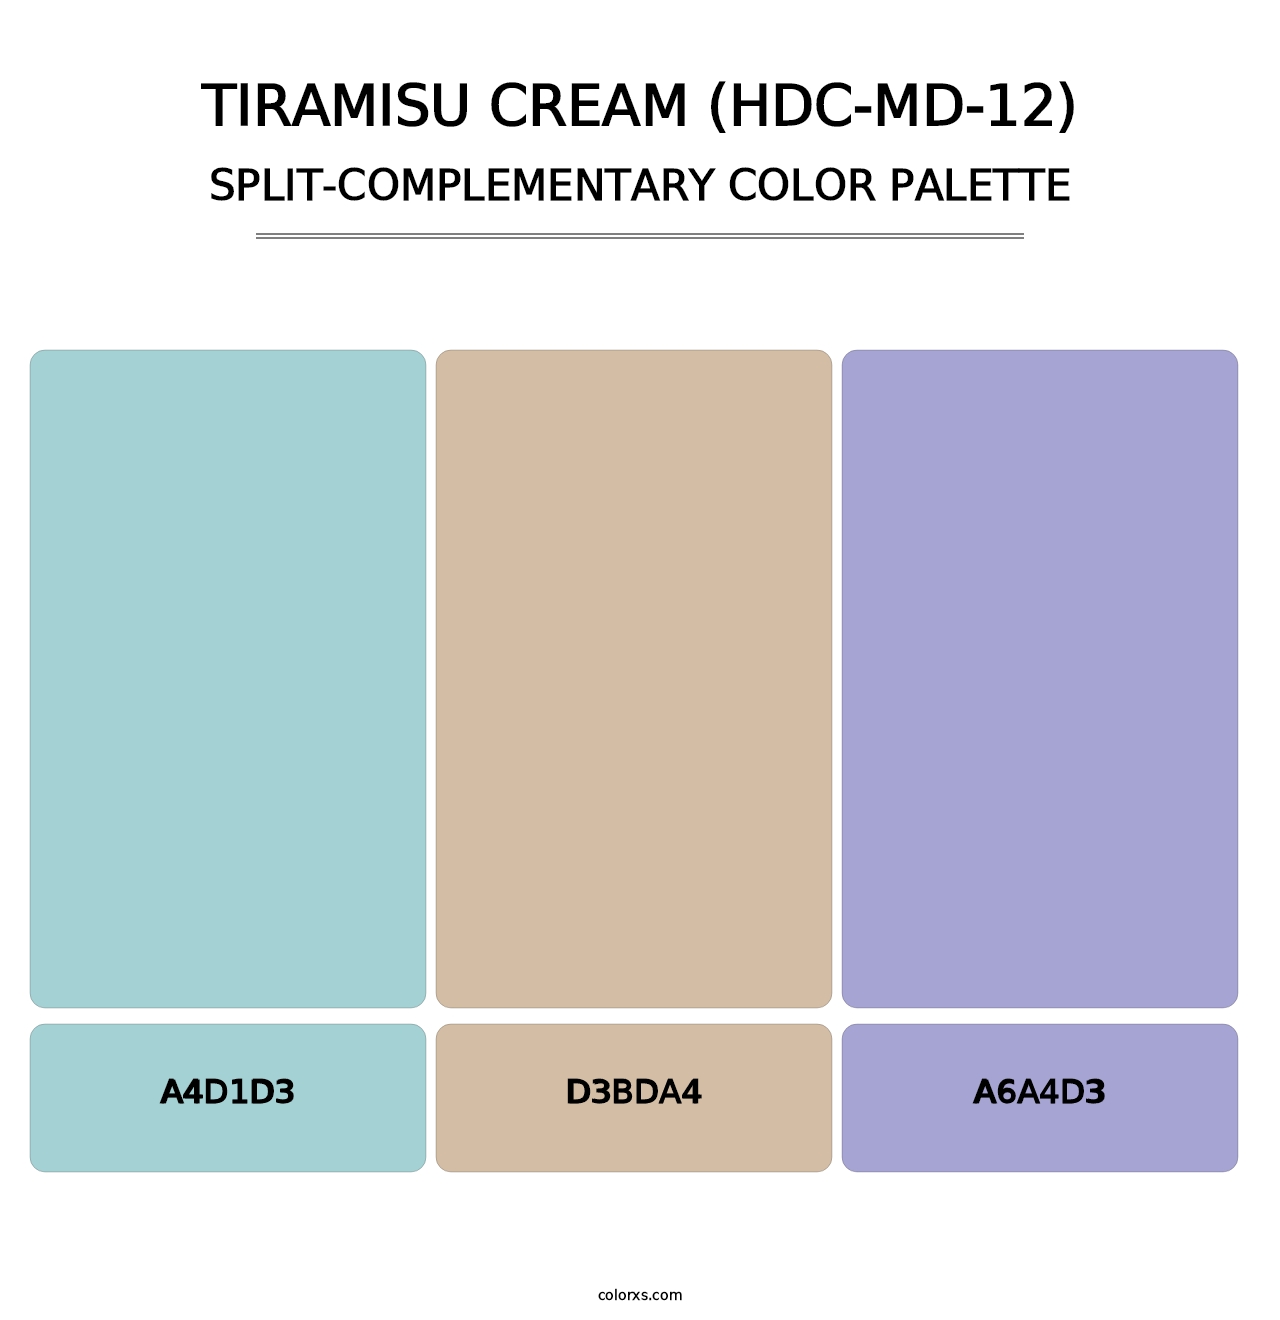 Tiramisu Cream (HDC-MD-12) - Split-Complementary Color Palette